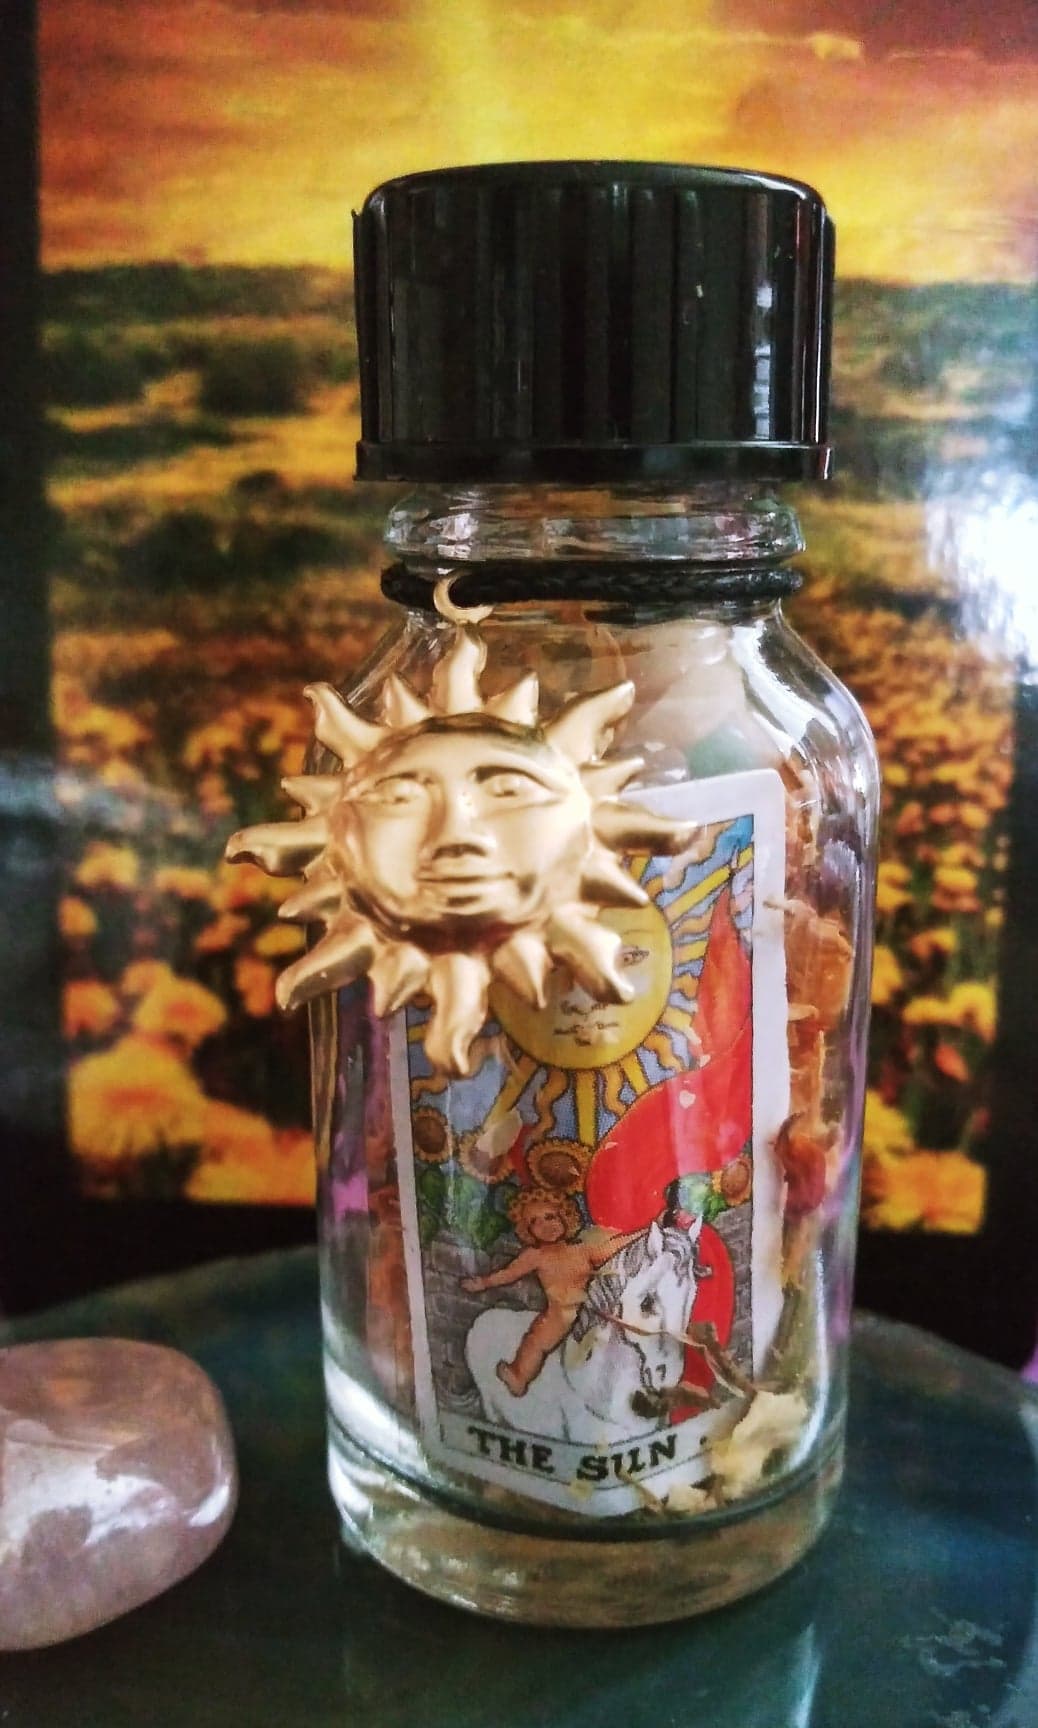 The Sun Tarot Mini Spell Jar